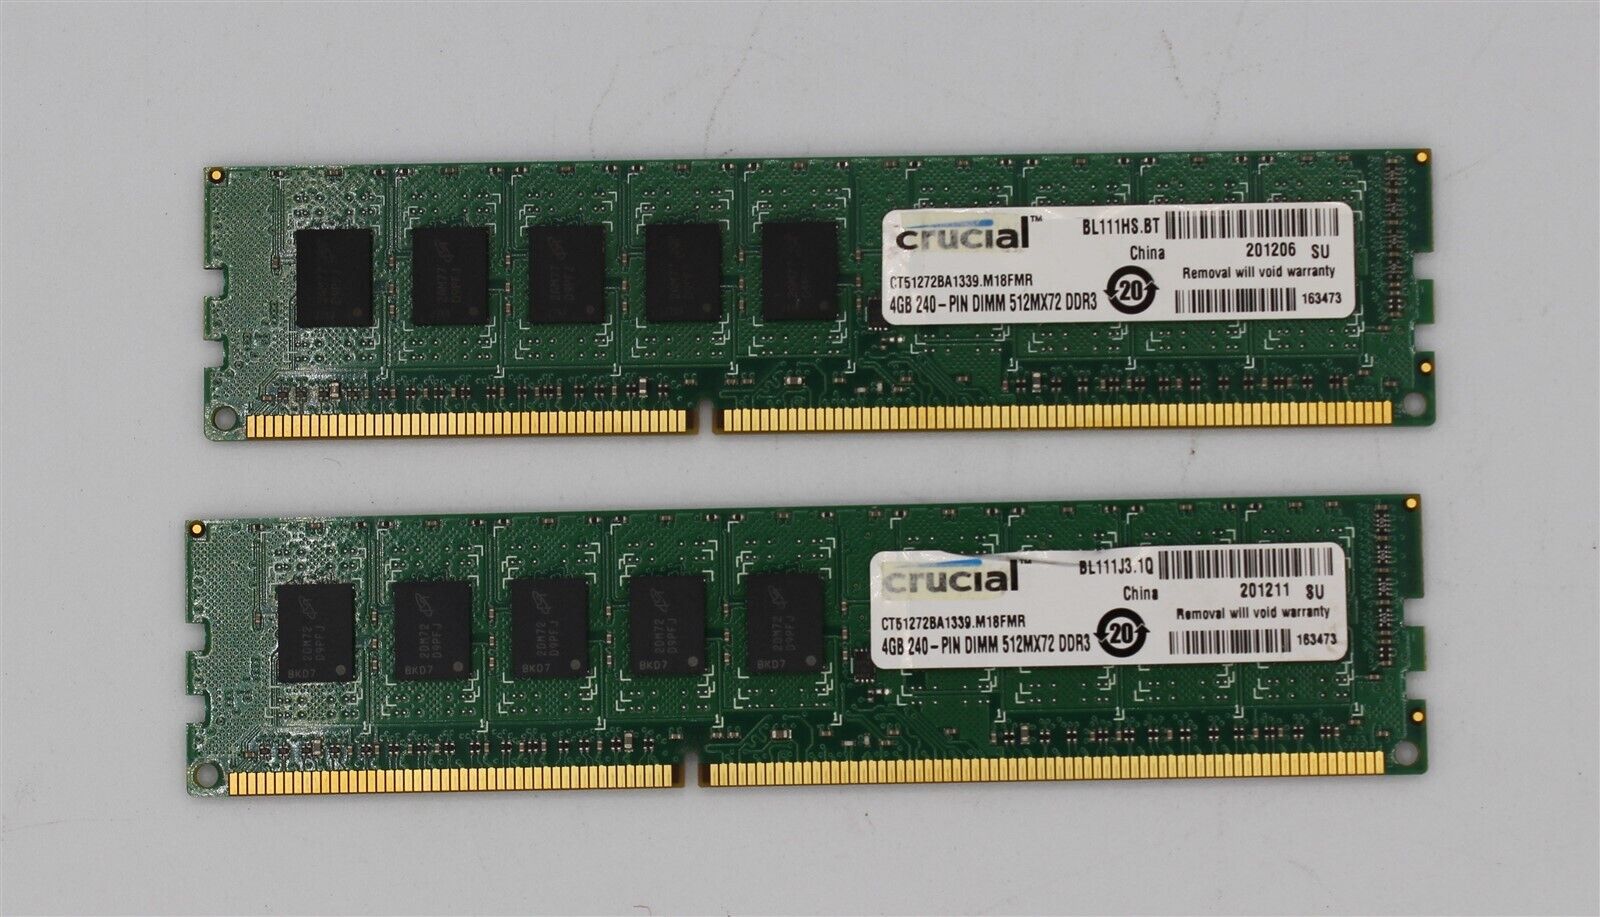 Crucial Ram 4 GB x2 - 240 PIN DIMM 512MX72 DDR3 - Non ECC